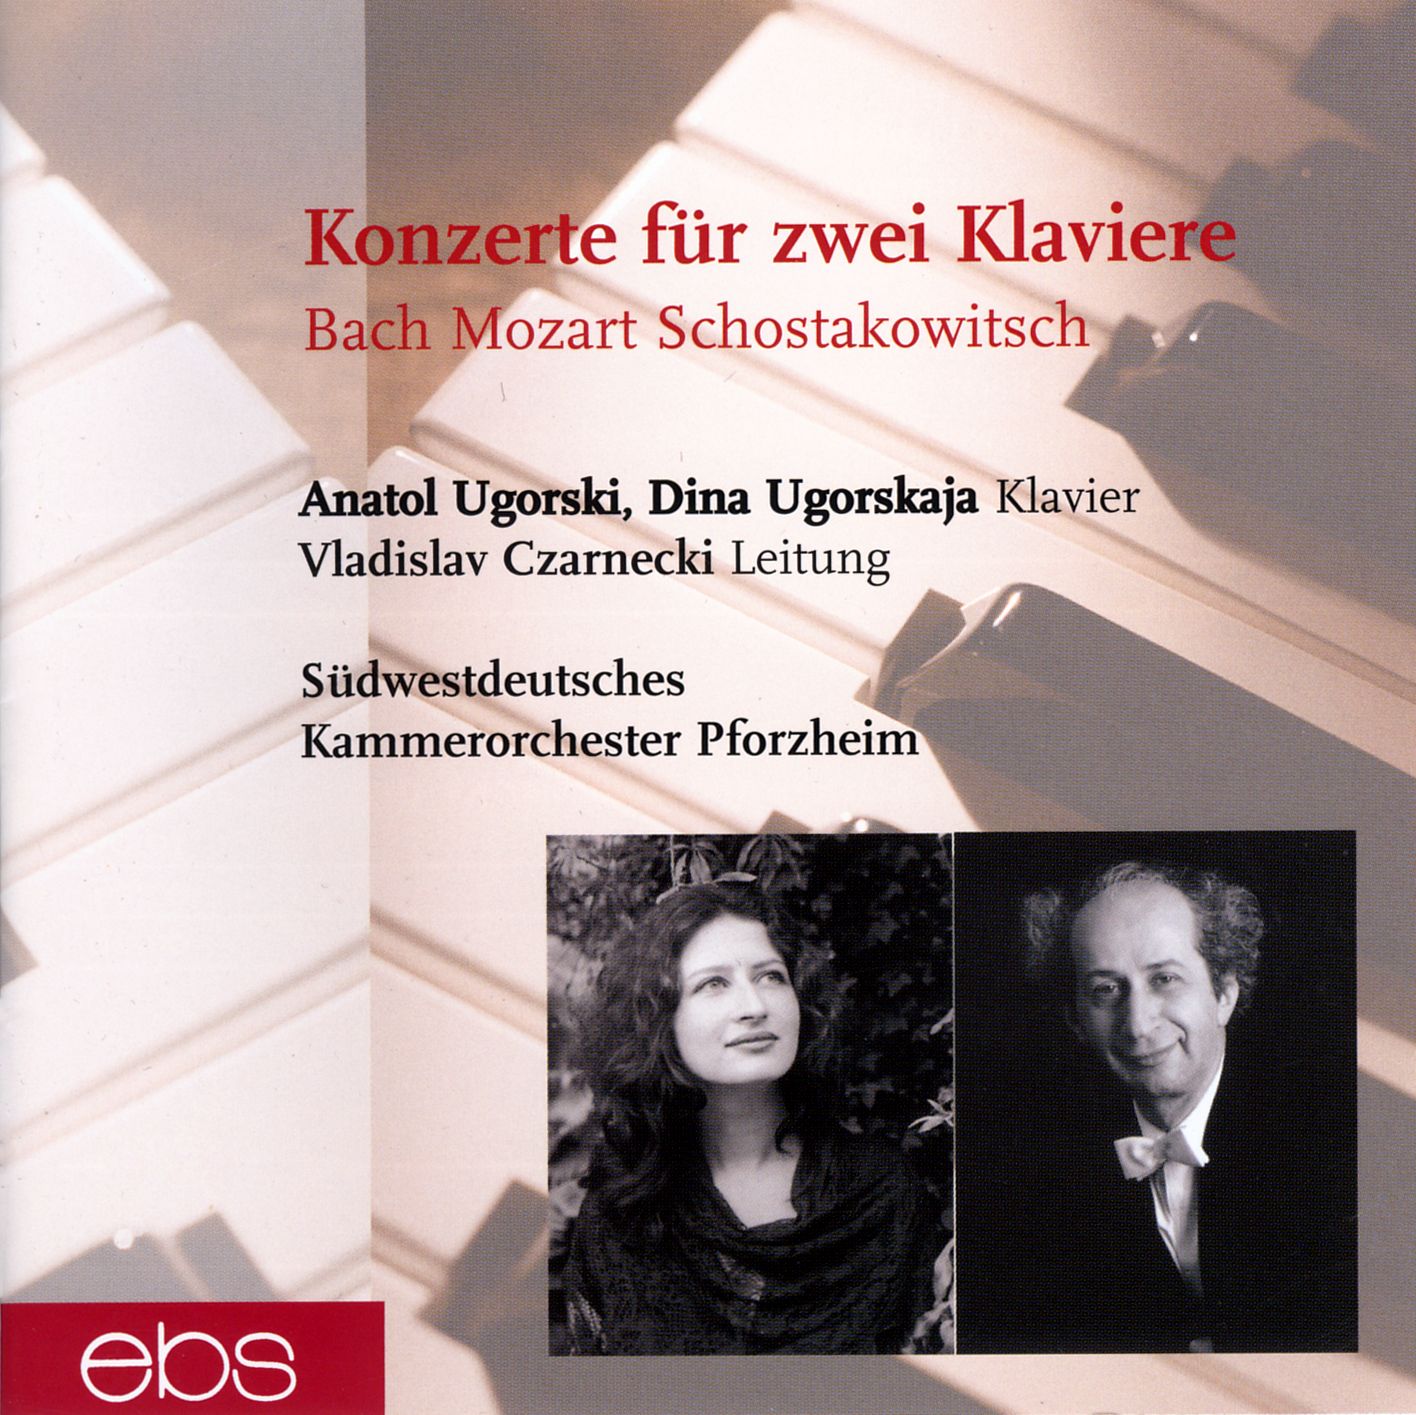 Anatol Ugorski & Dina Ugorskaja - Konzerte für zwei Klaviere